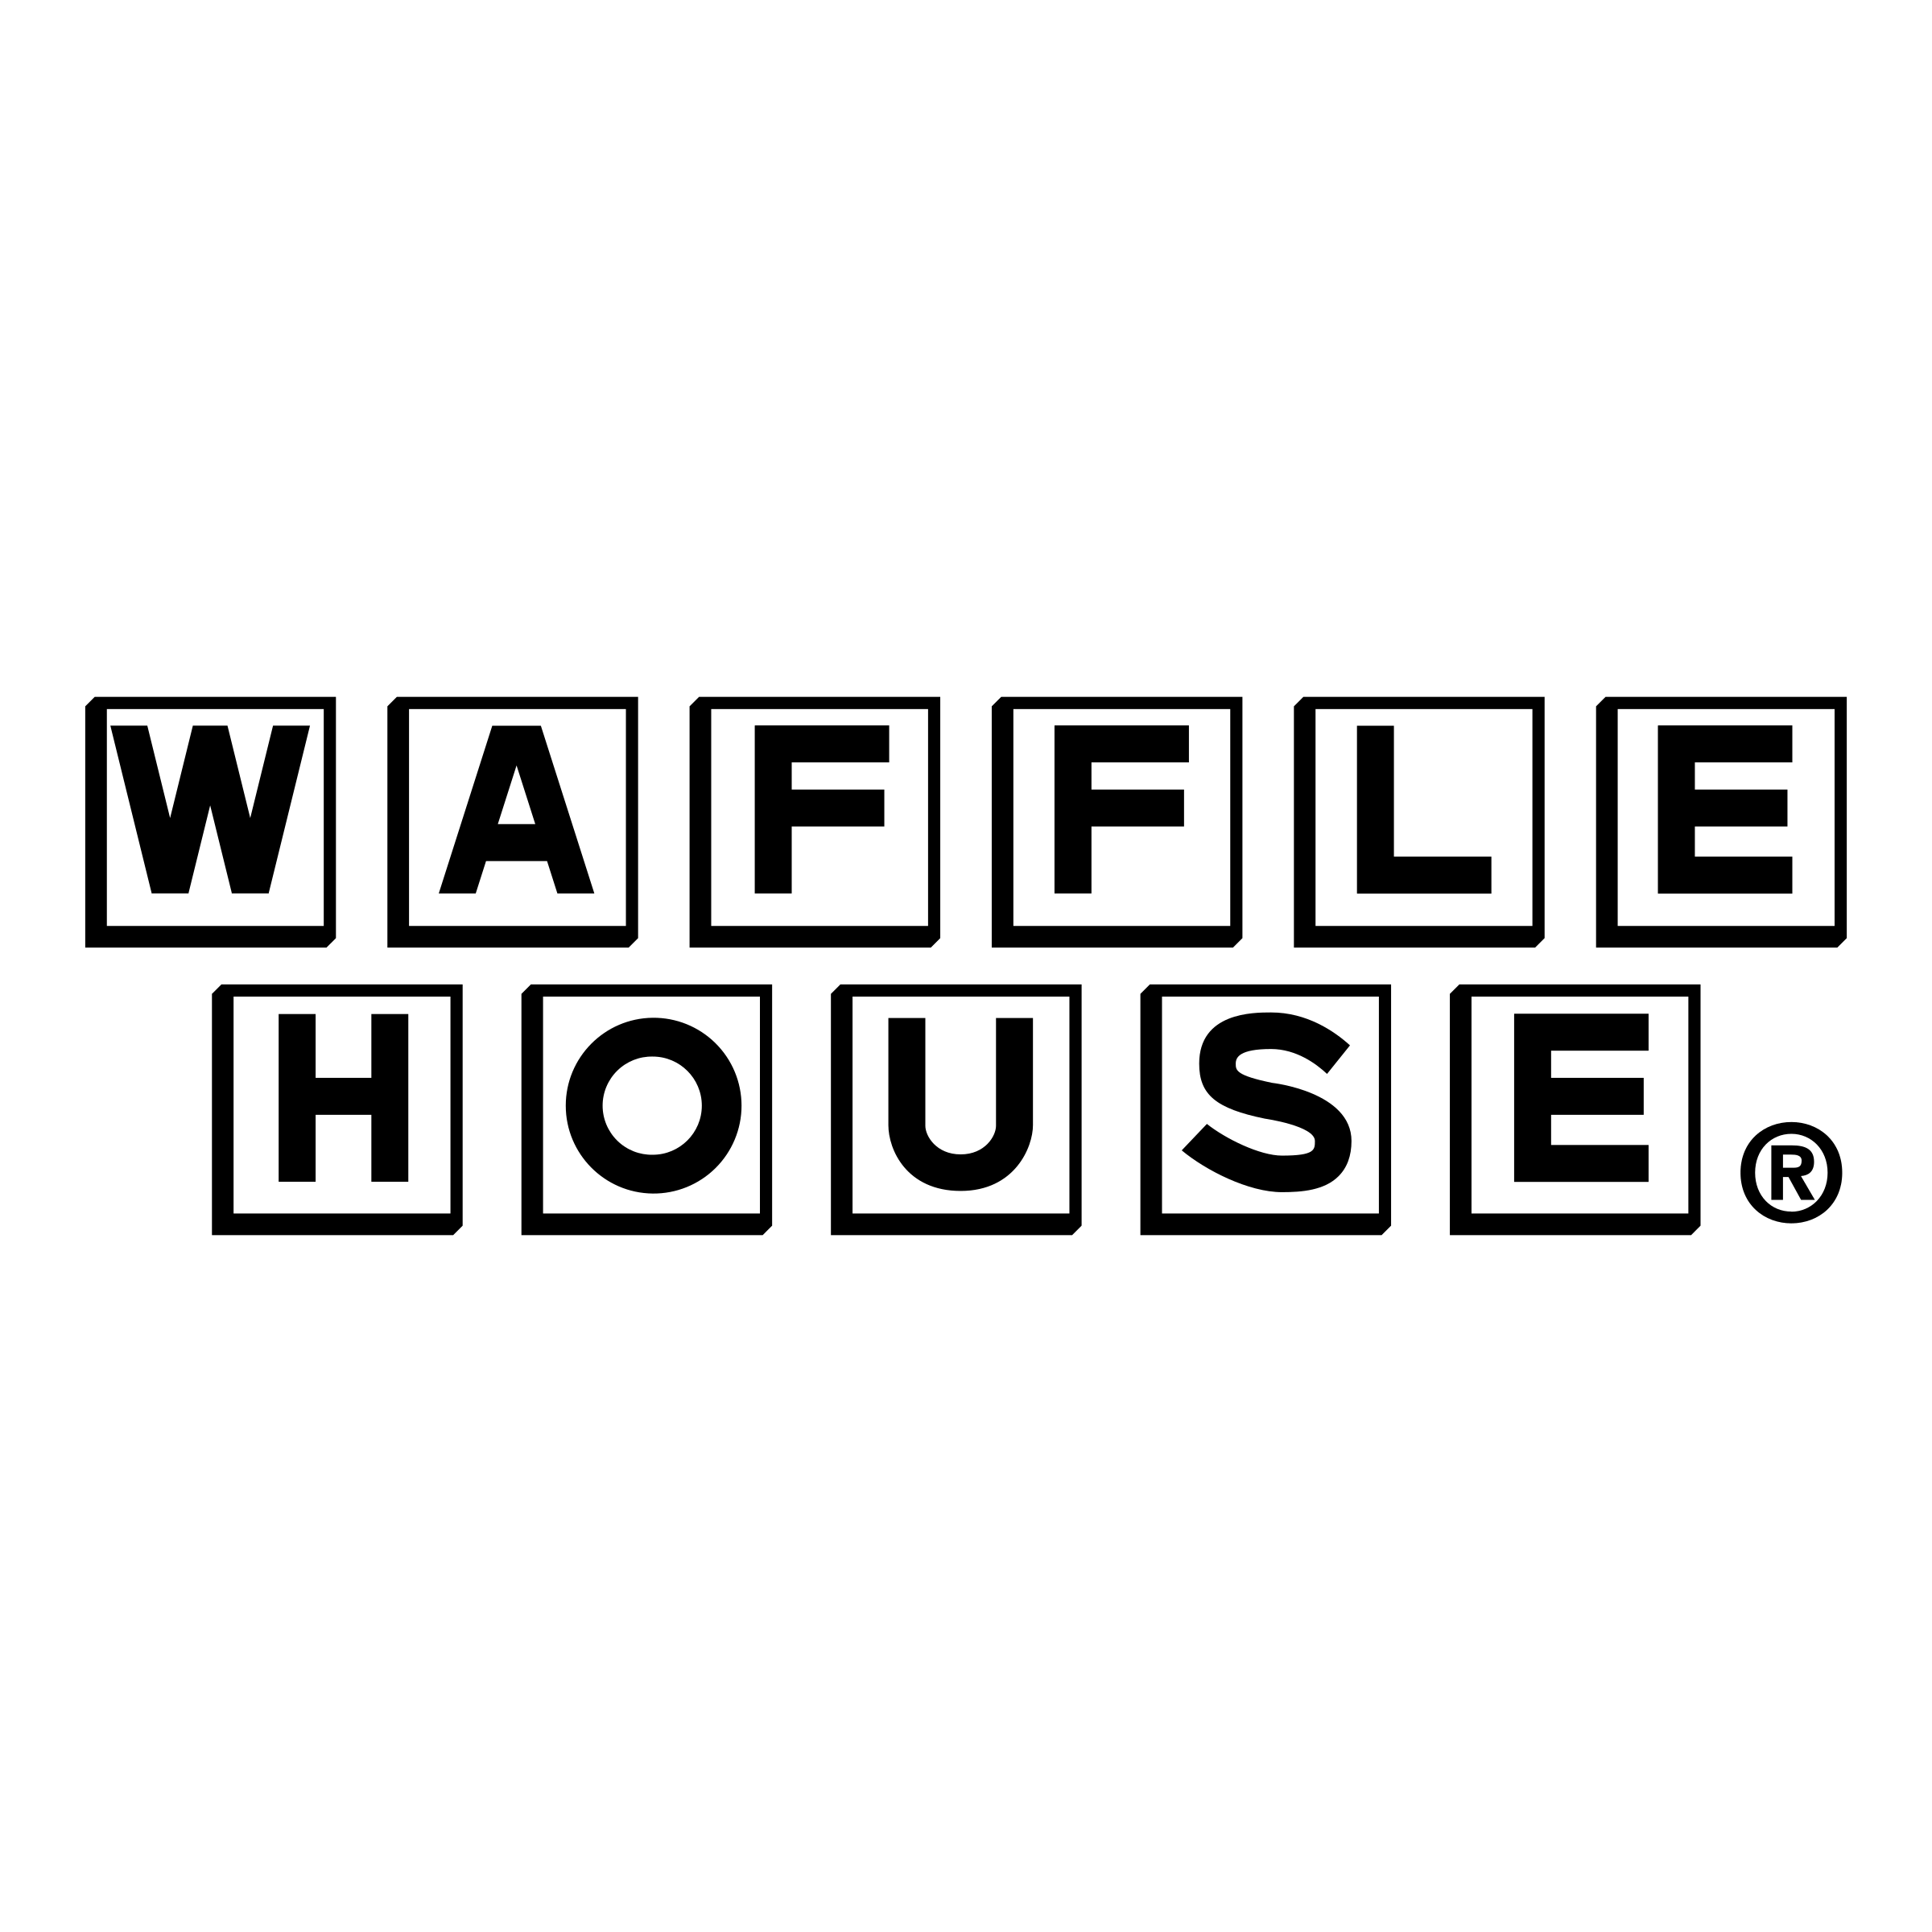 Waffle House Logo - Waffle House Logo PNG Transparent & SVG Vector - Freebie Supply